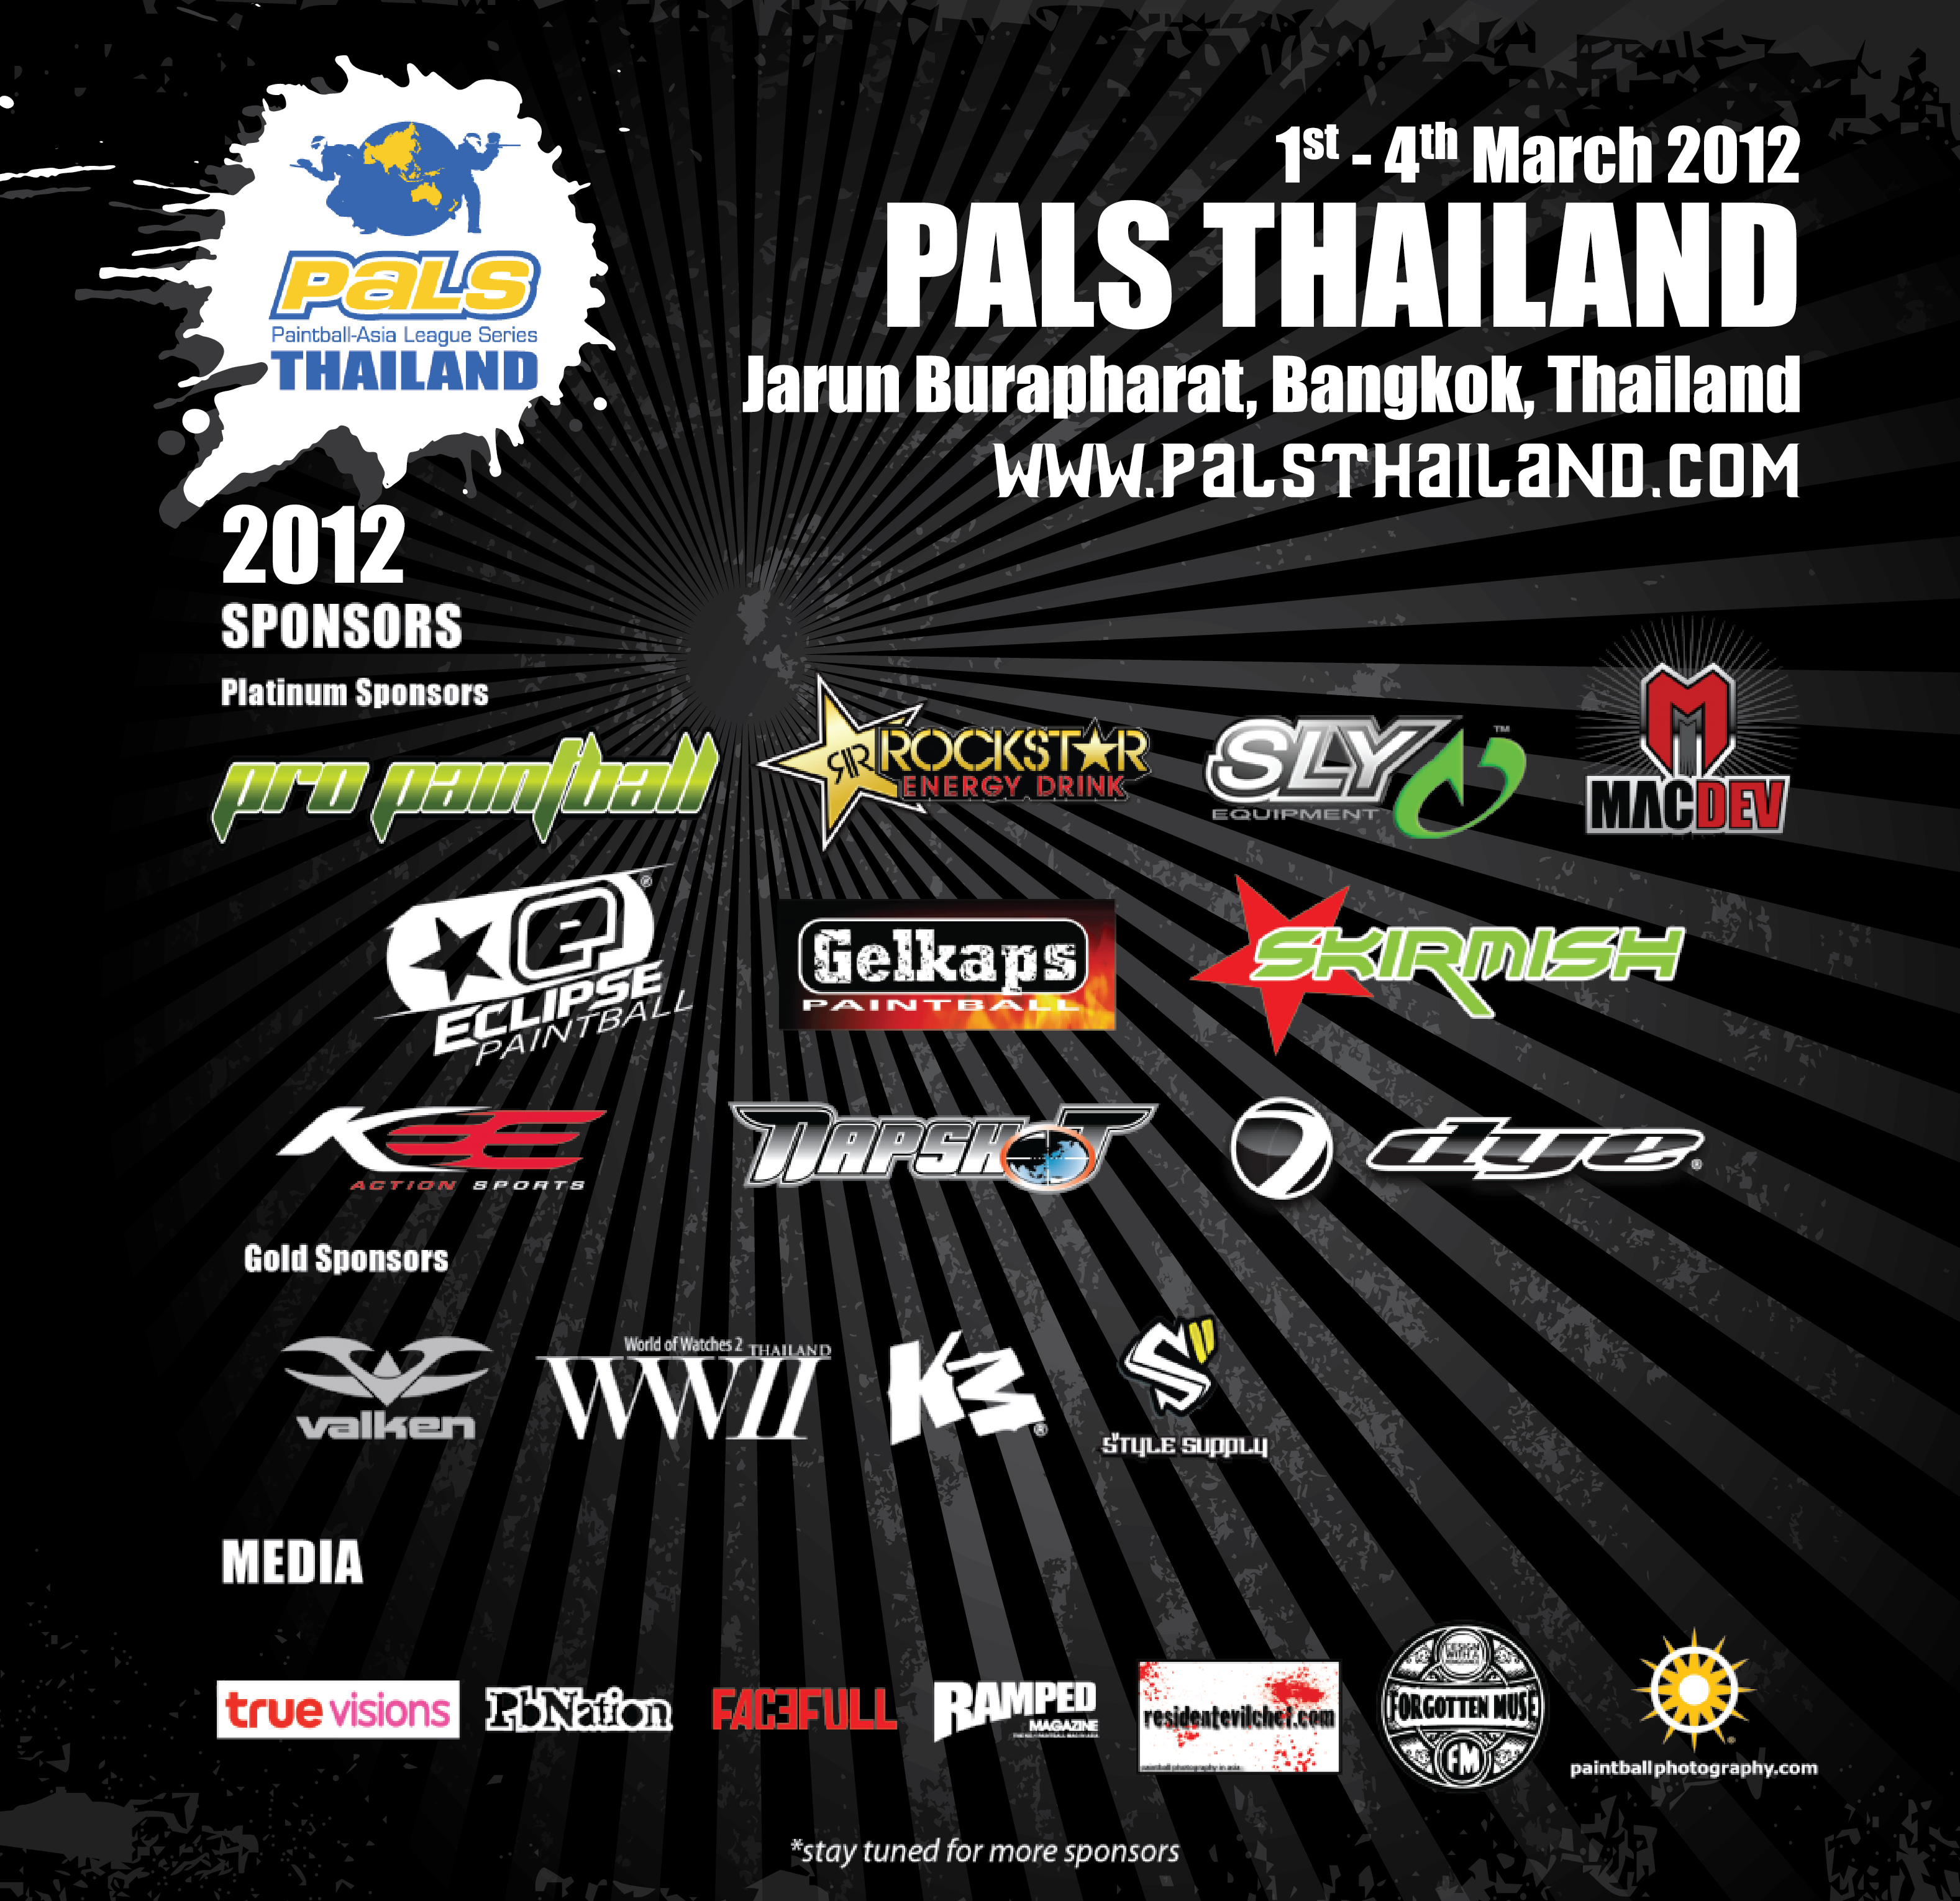 PALS Thailand 2012 Set to Kick Off